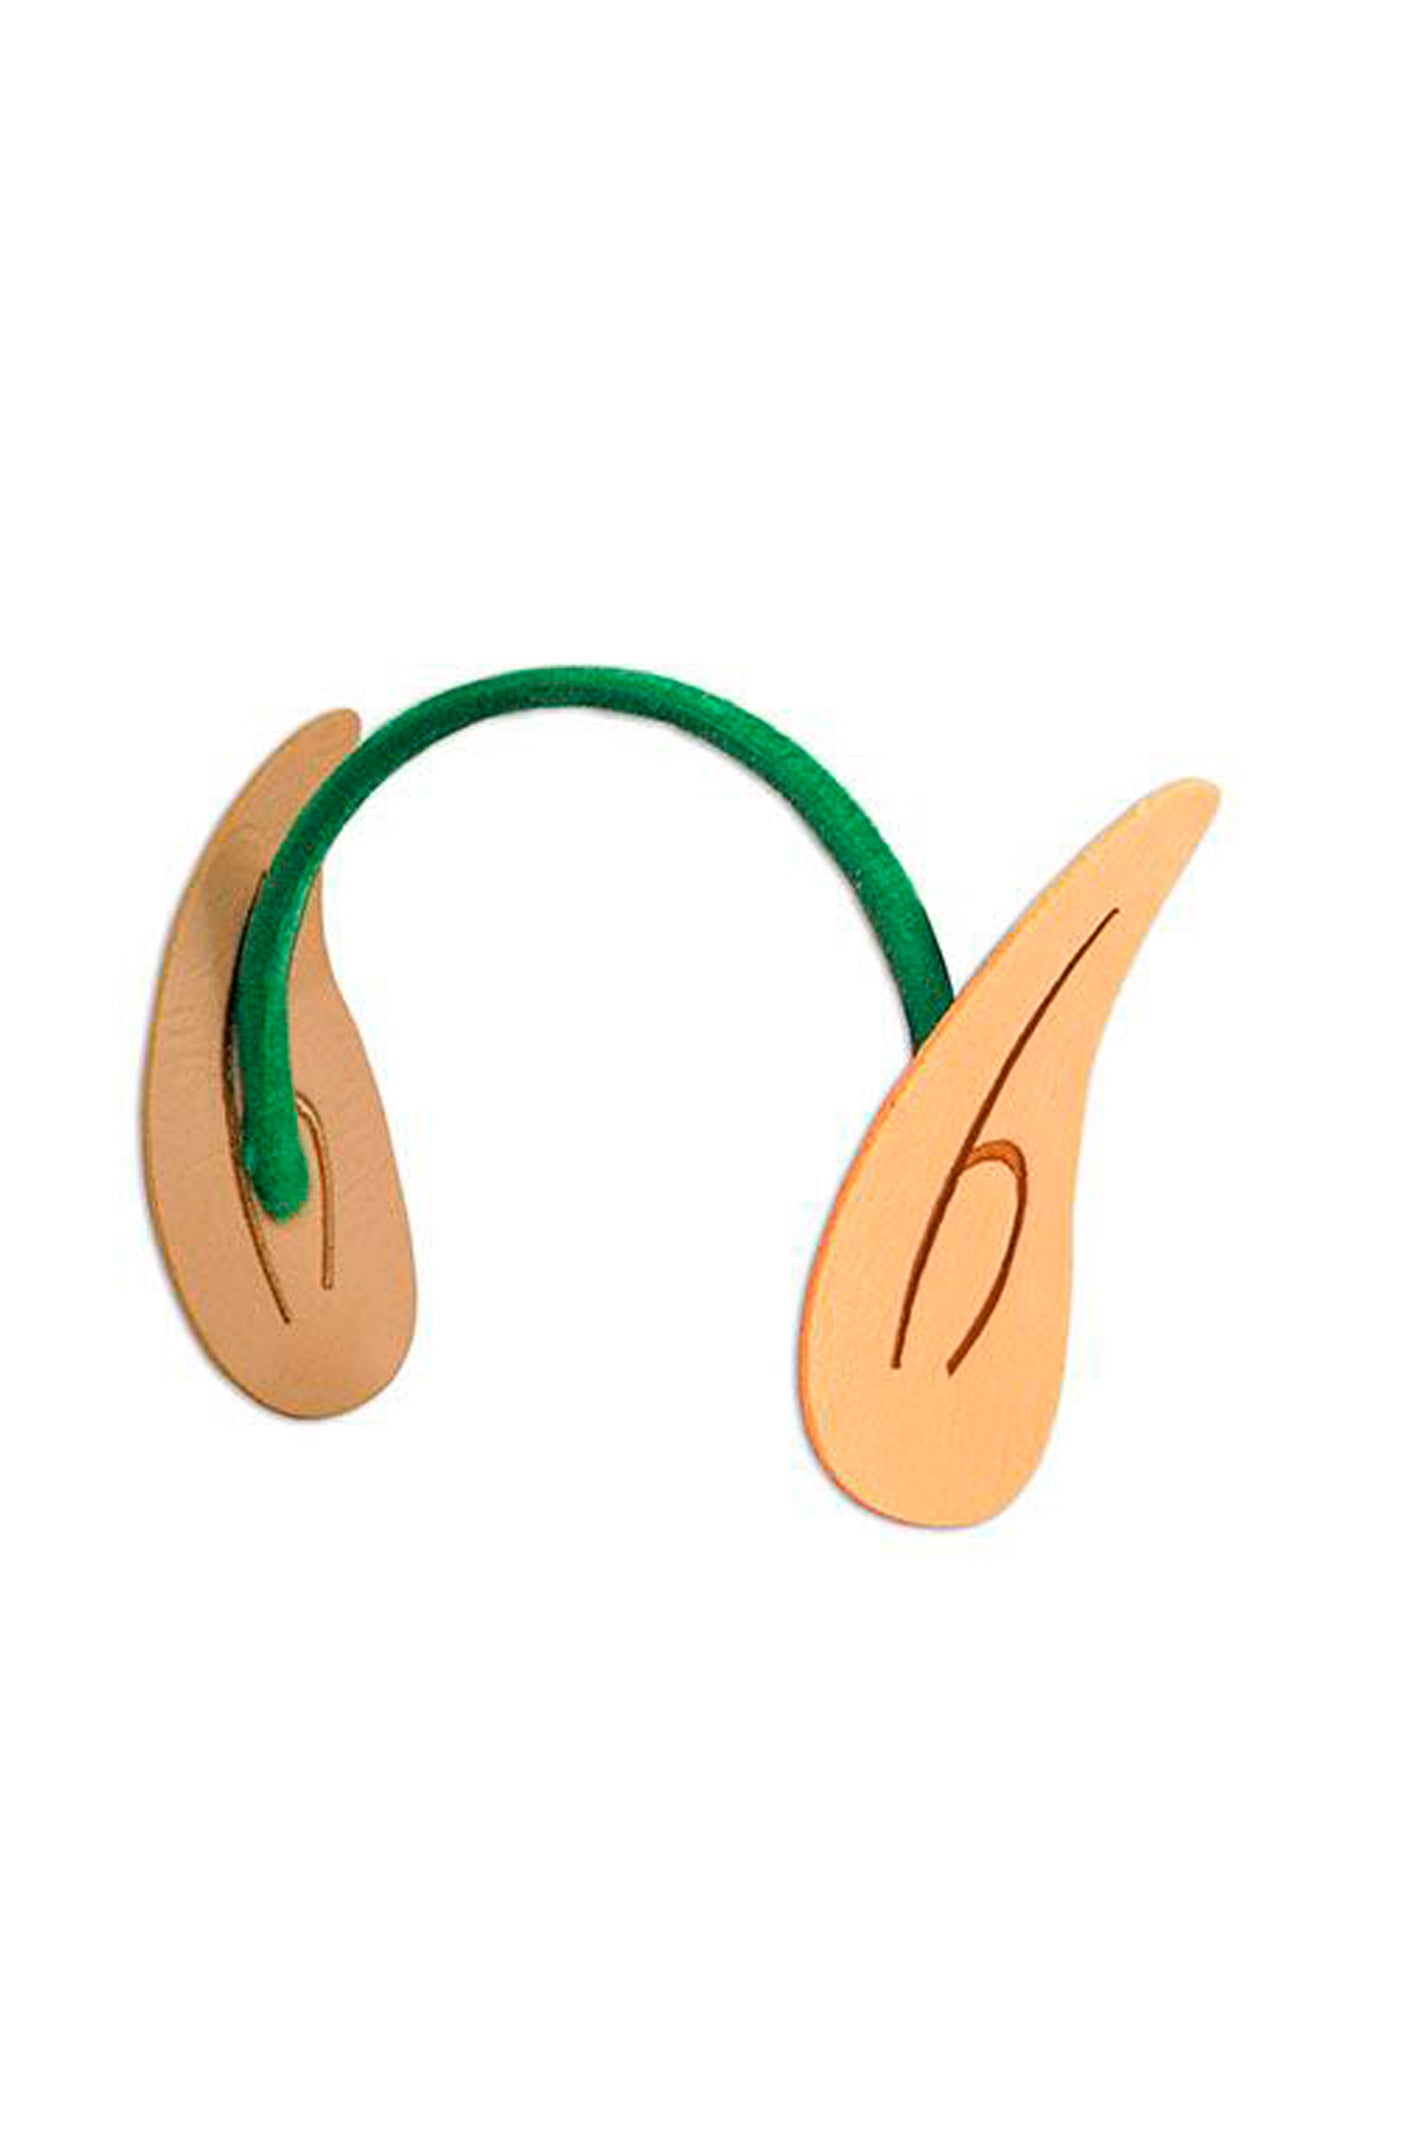 5311 - Elf Ears Headband - FINAL SALE